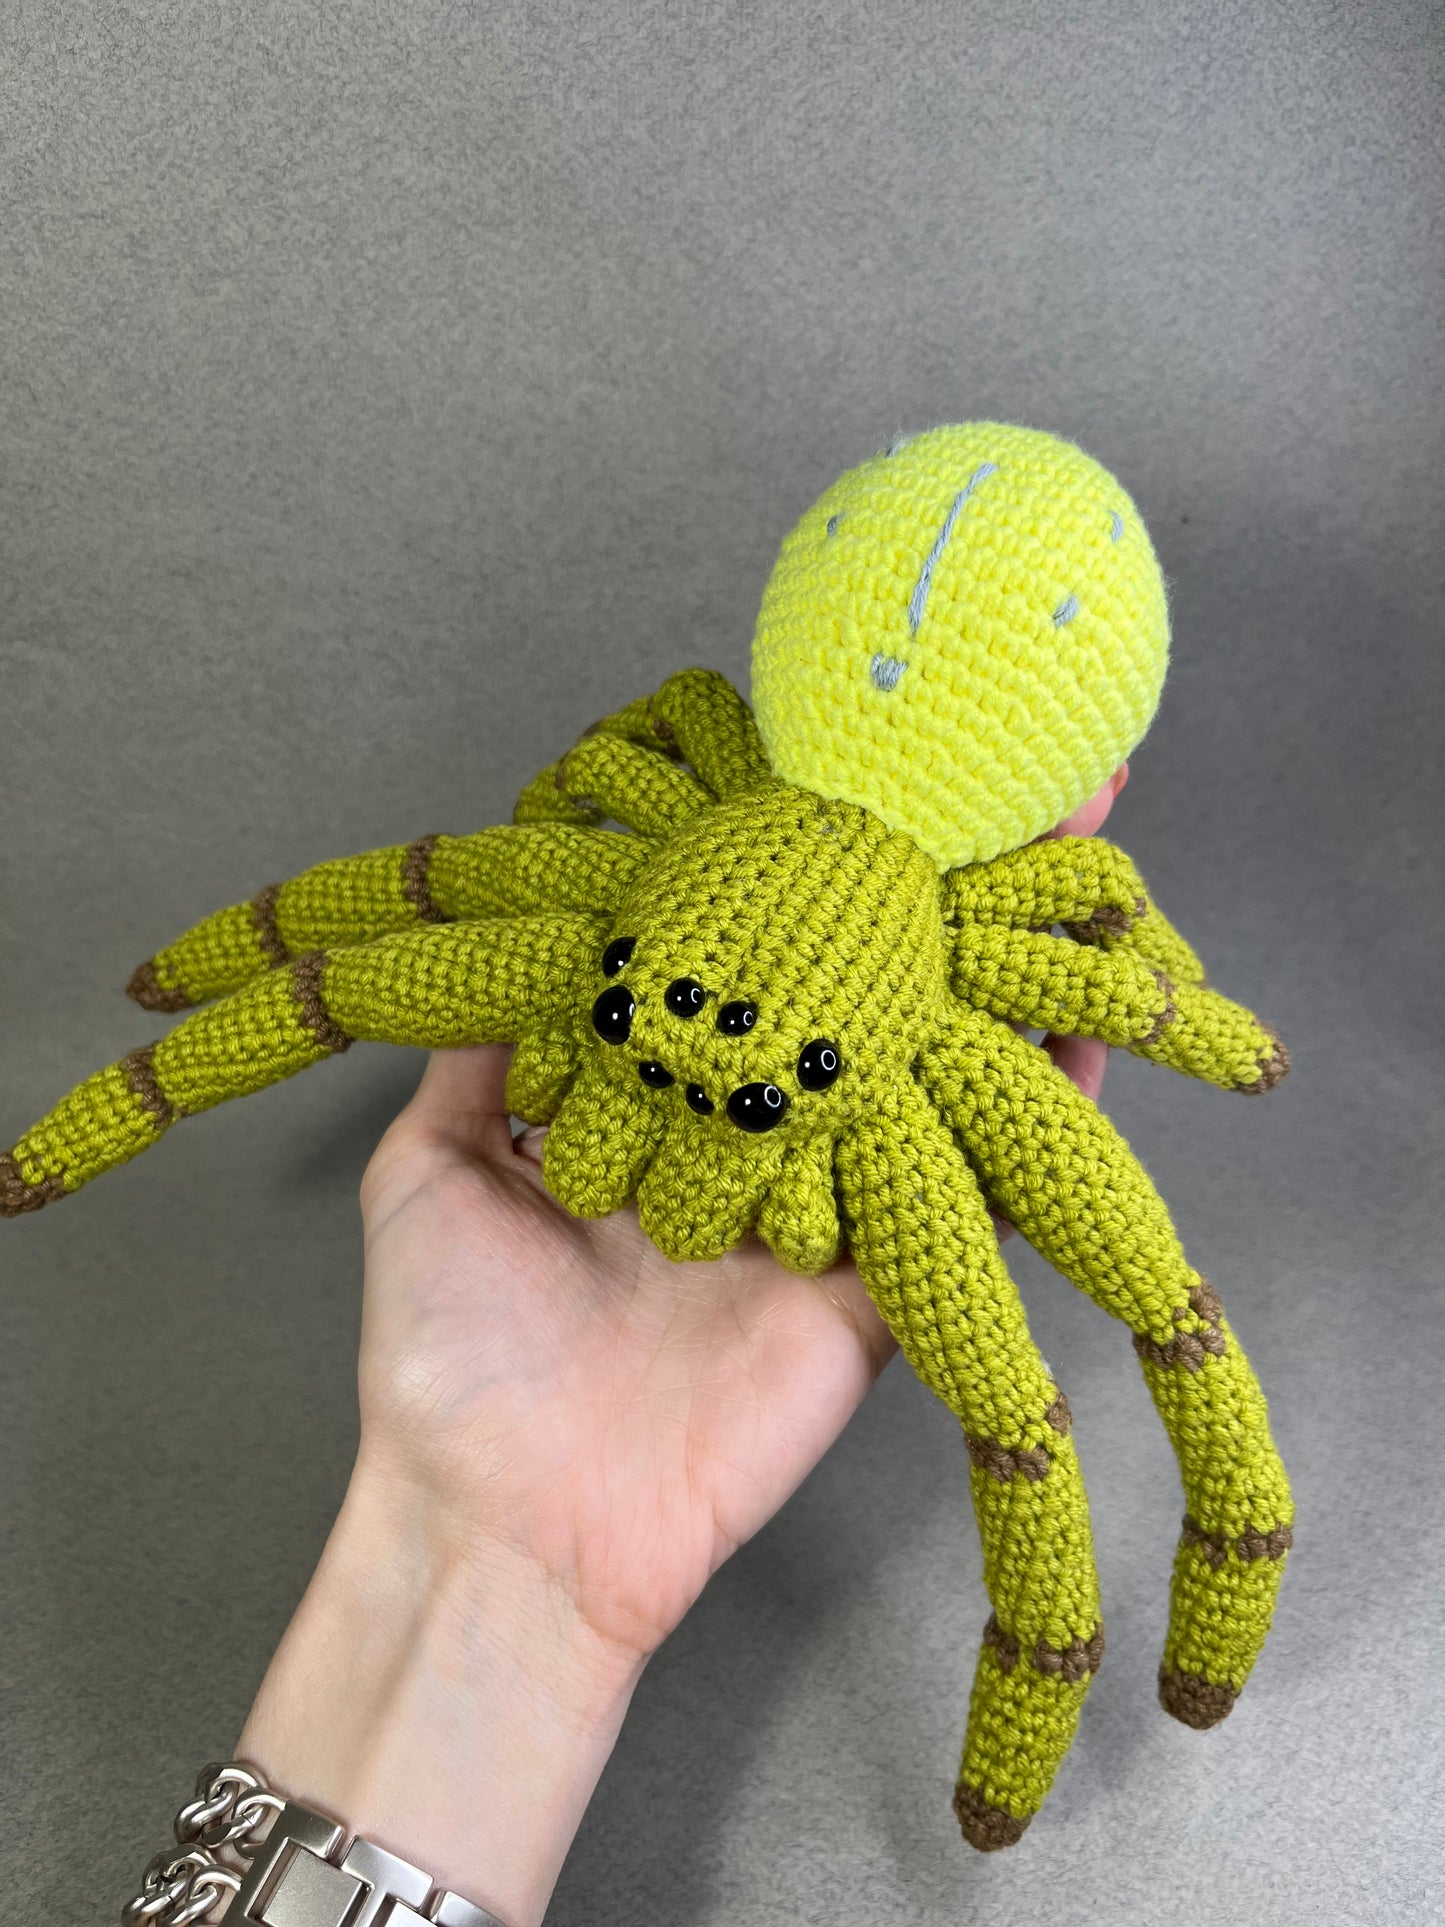 Crab Spider Crochet Pattern, PDF file in English